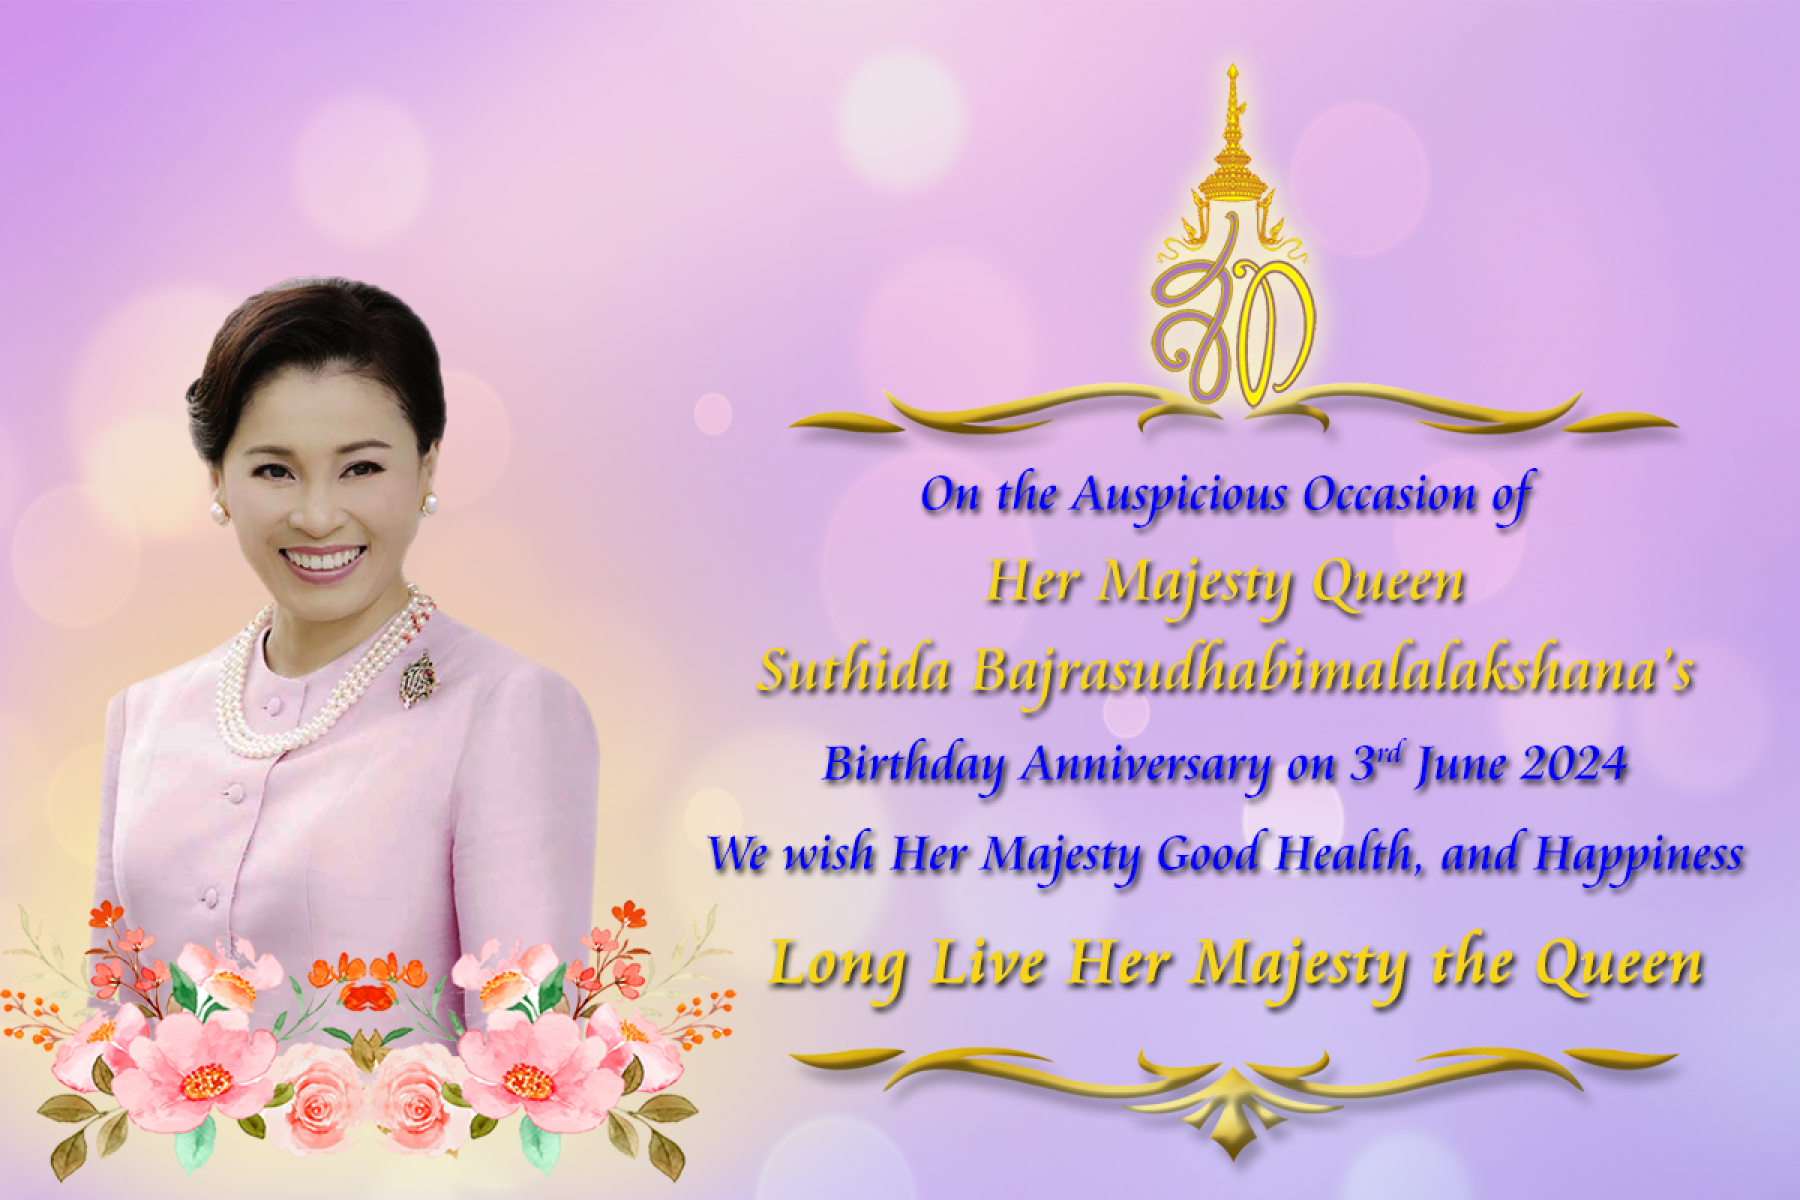 Her Majesty Queen Suthida Bajrasudhabimalalakshana's Birthday